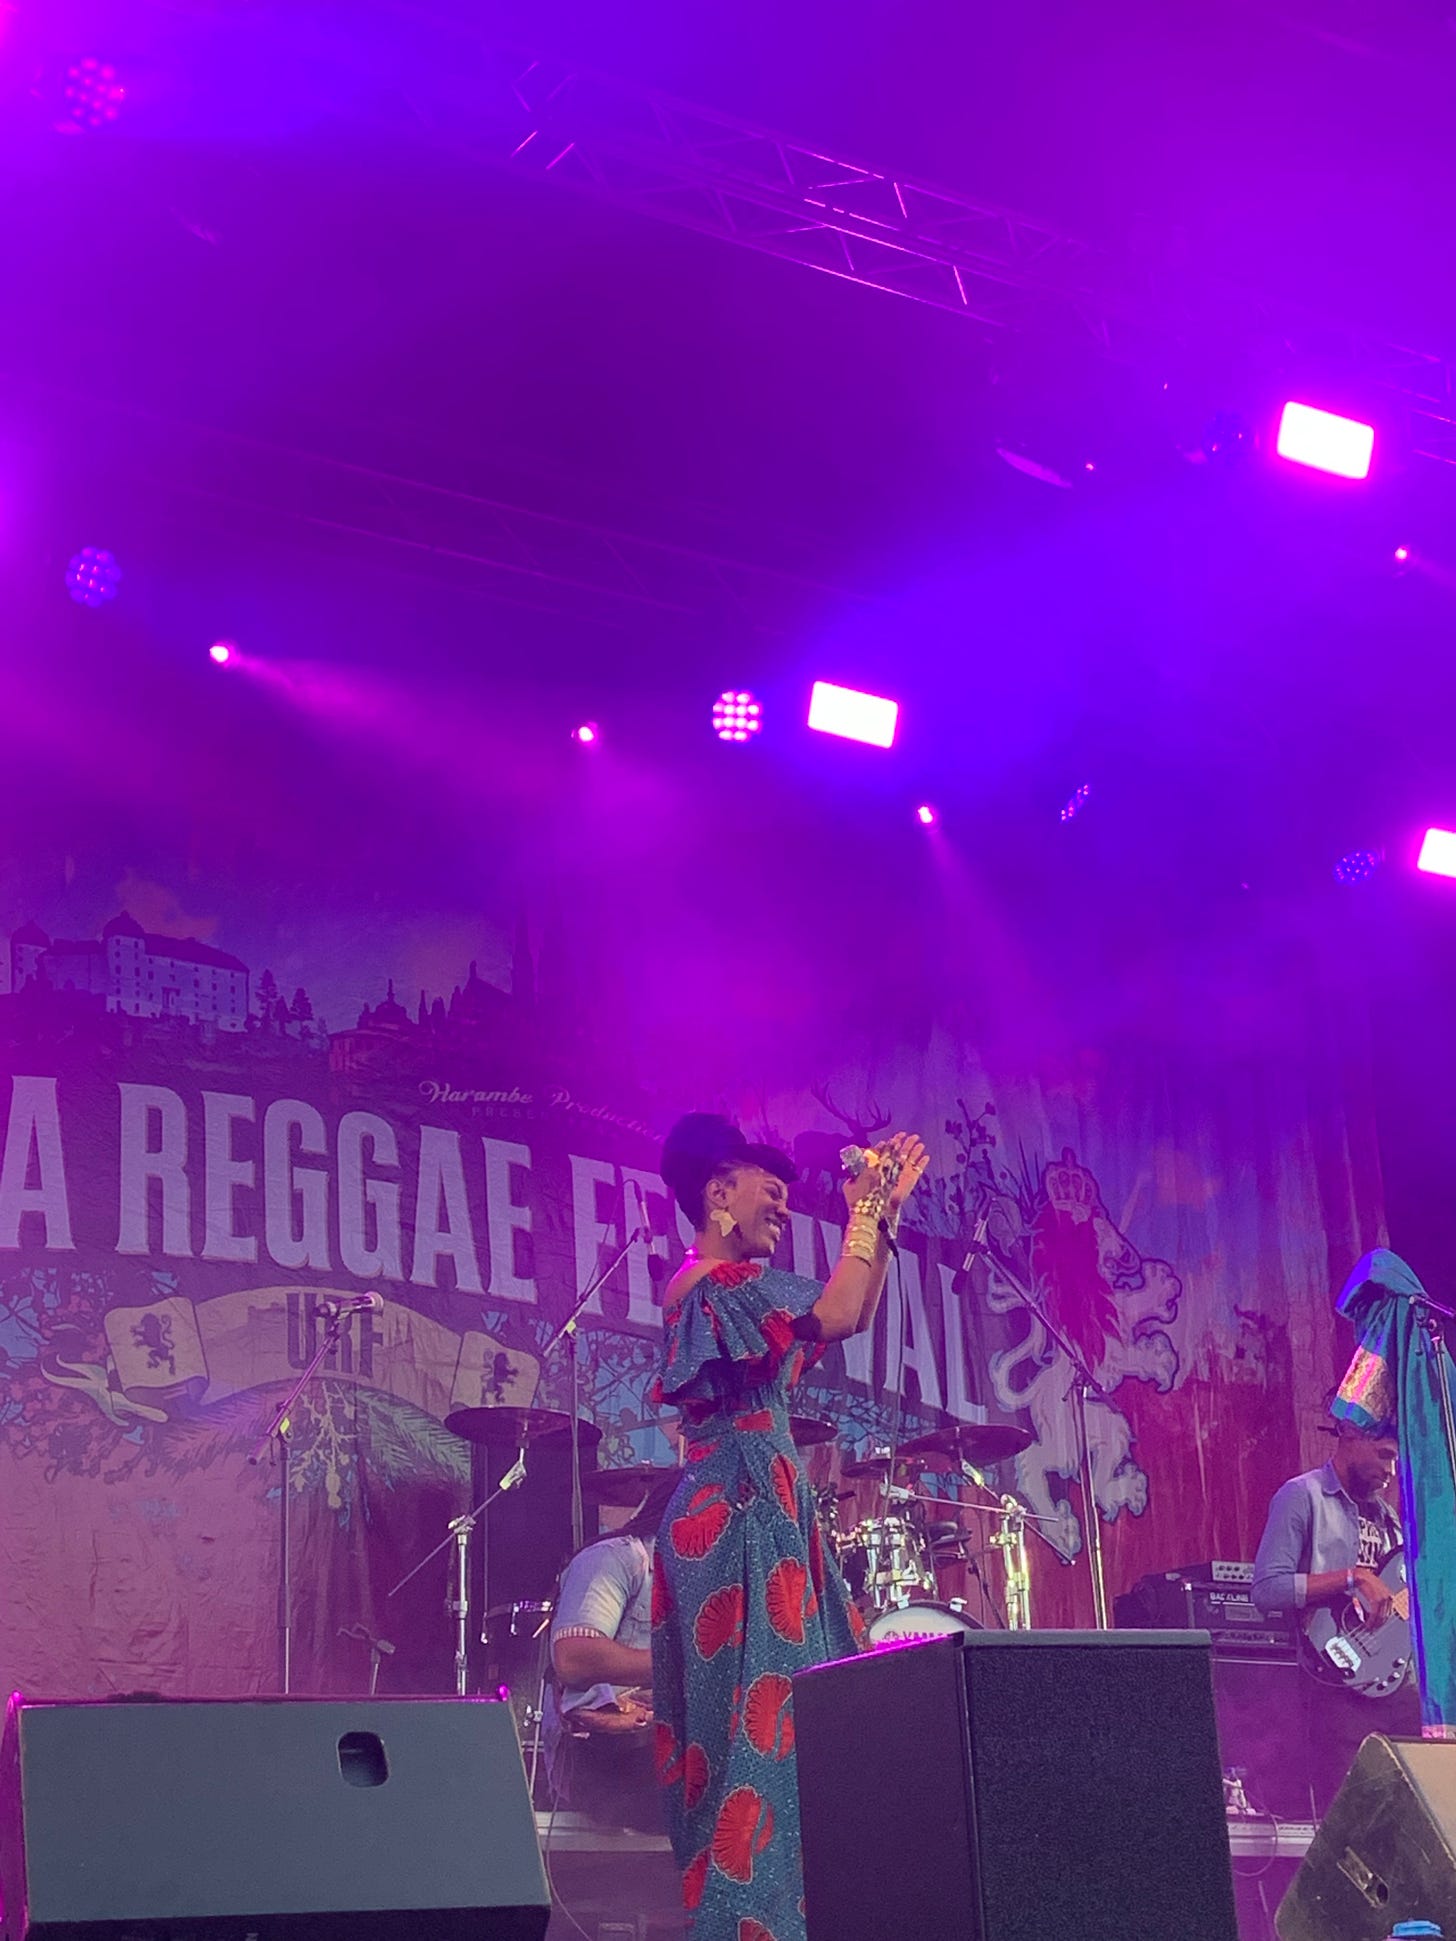 hempress sativa, a black reggae arists claps on stage following an amazing performance